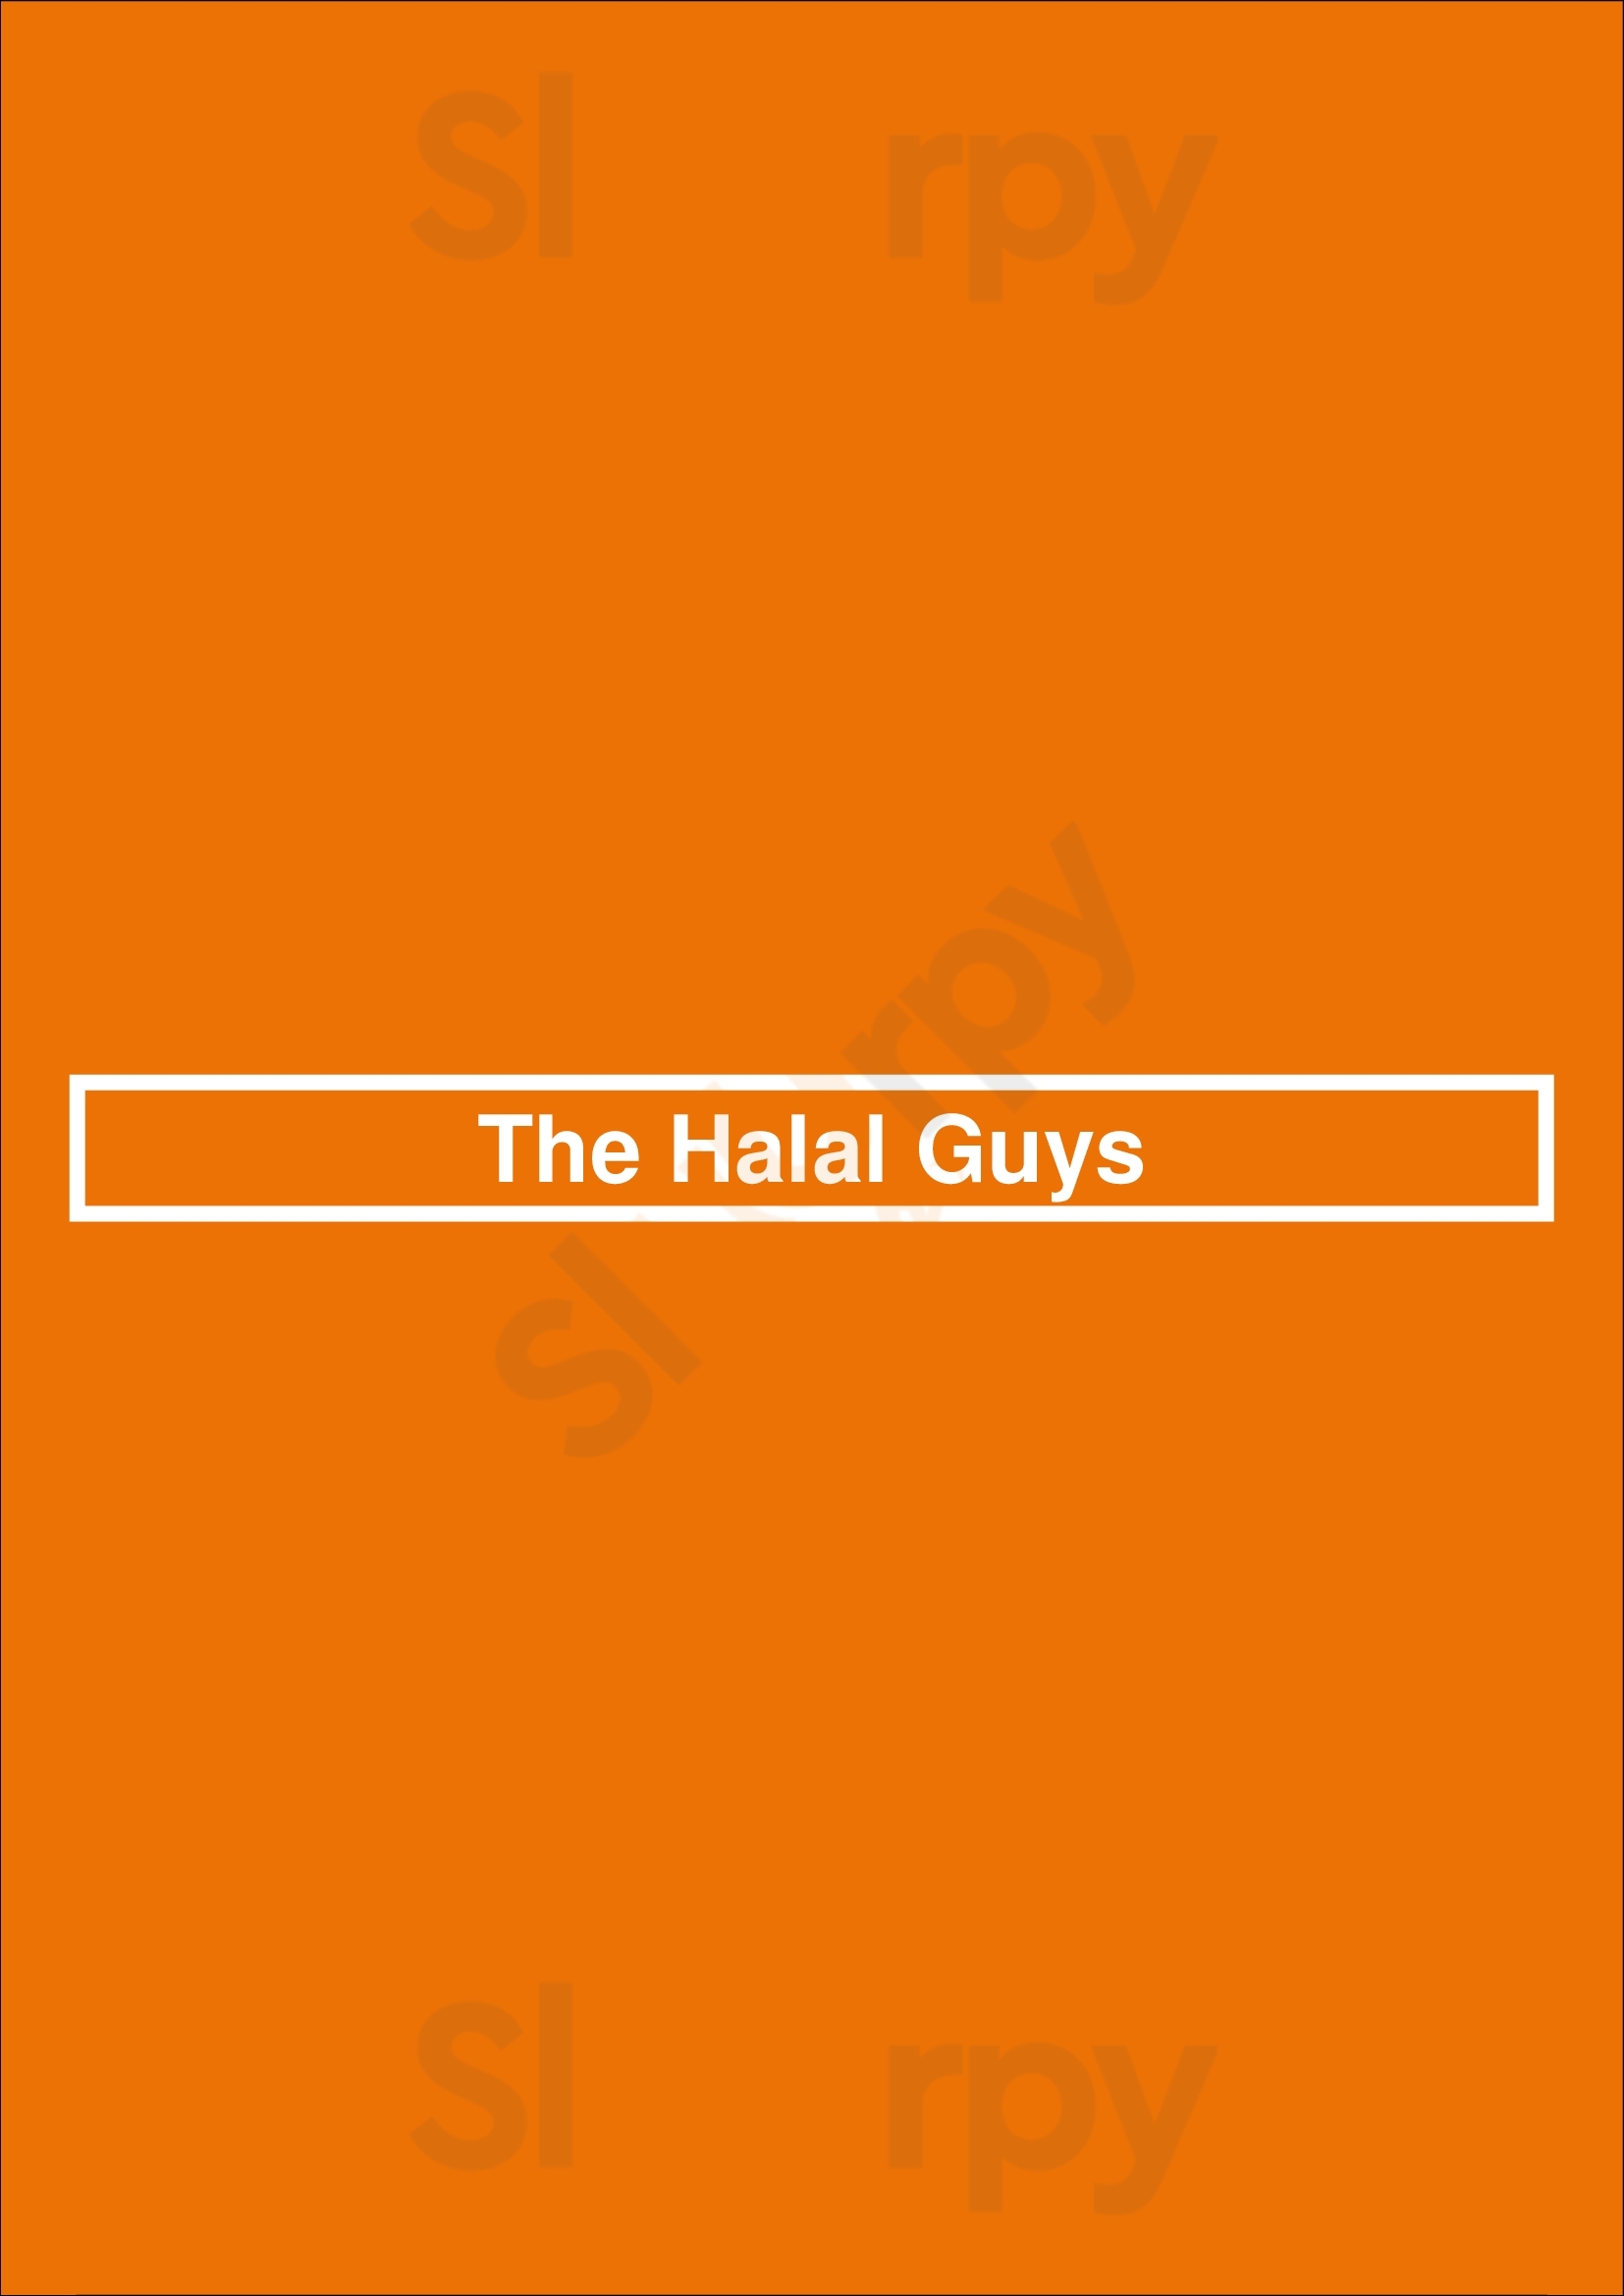 The Halal Guys Dallas Menu - 1